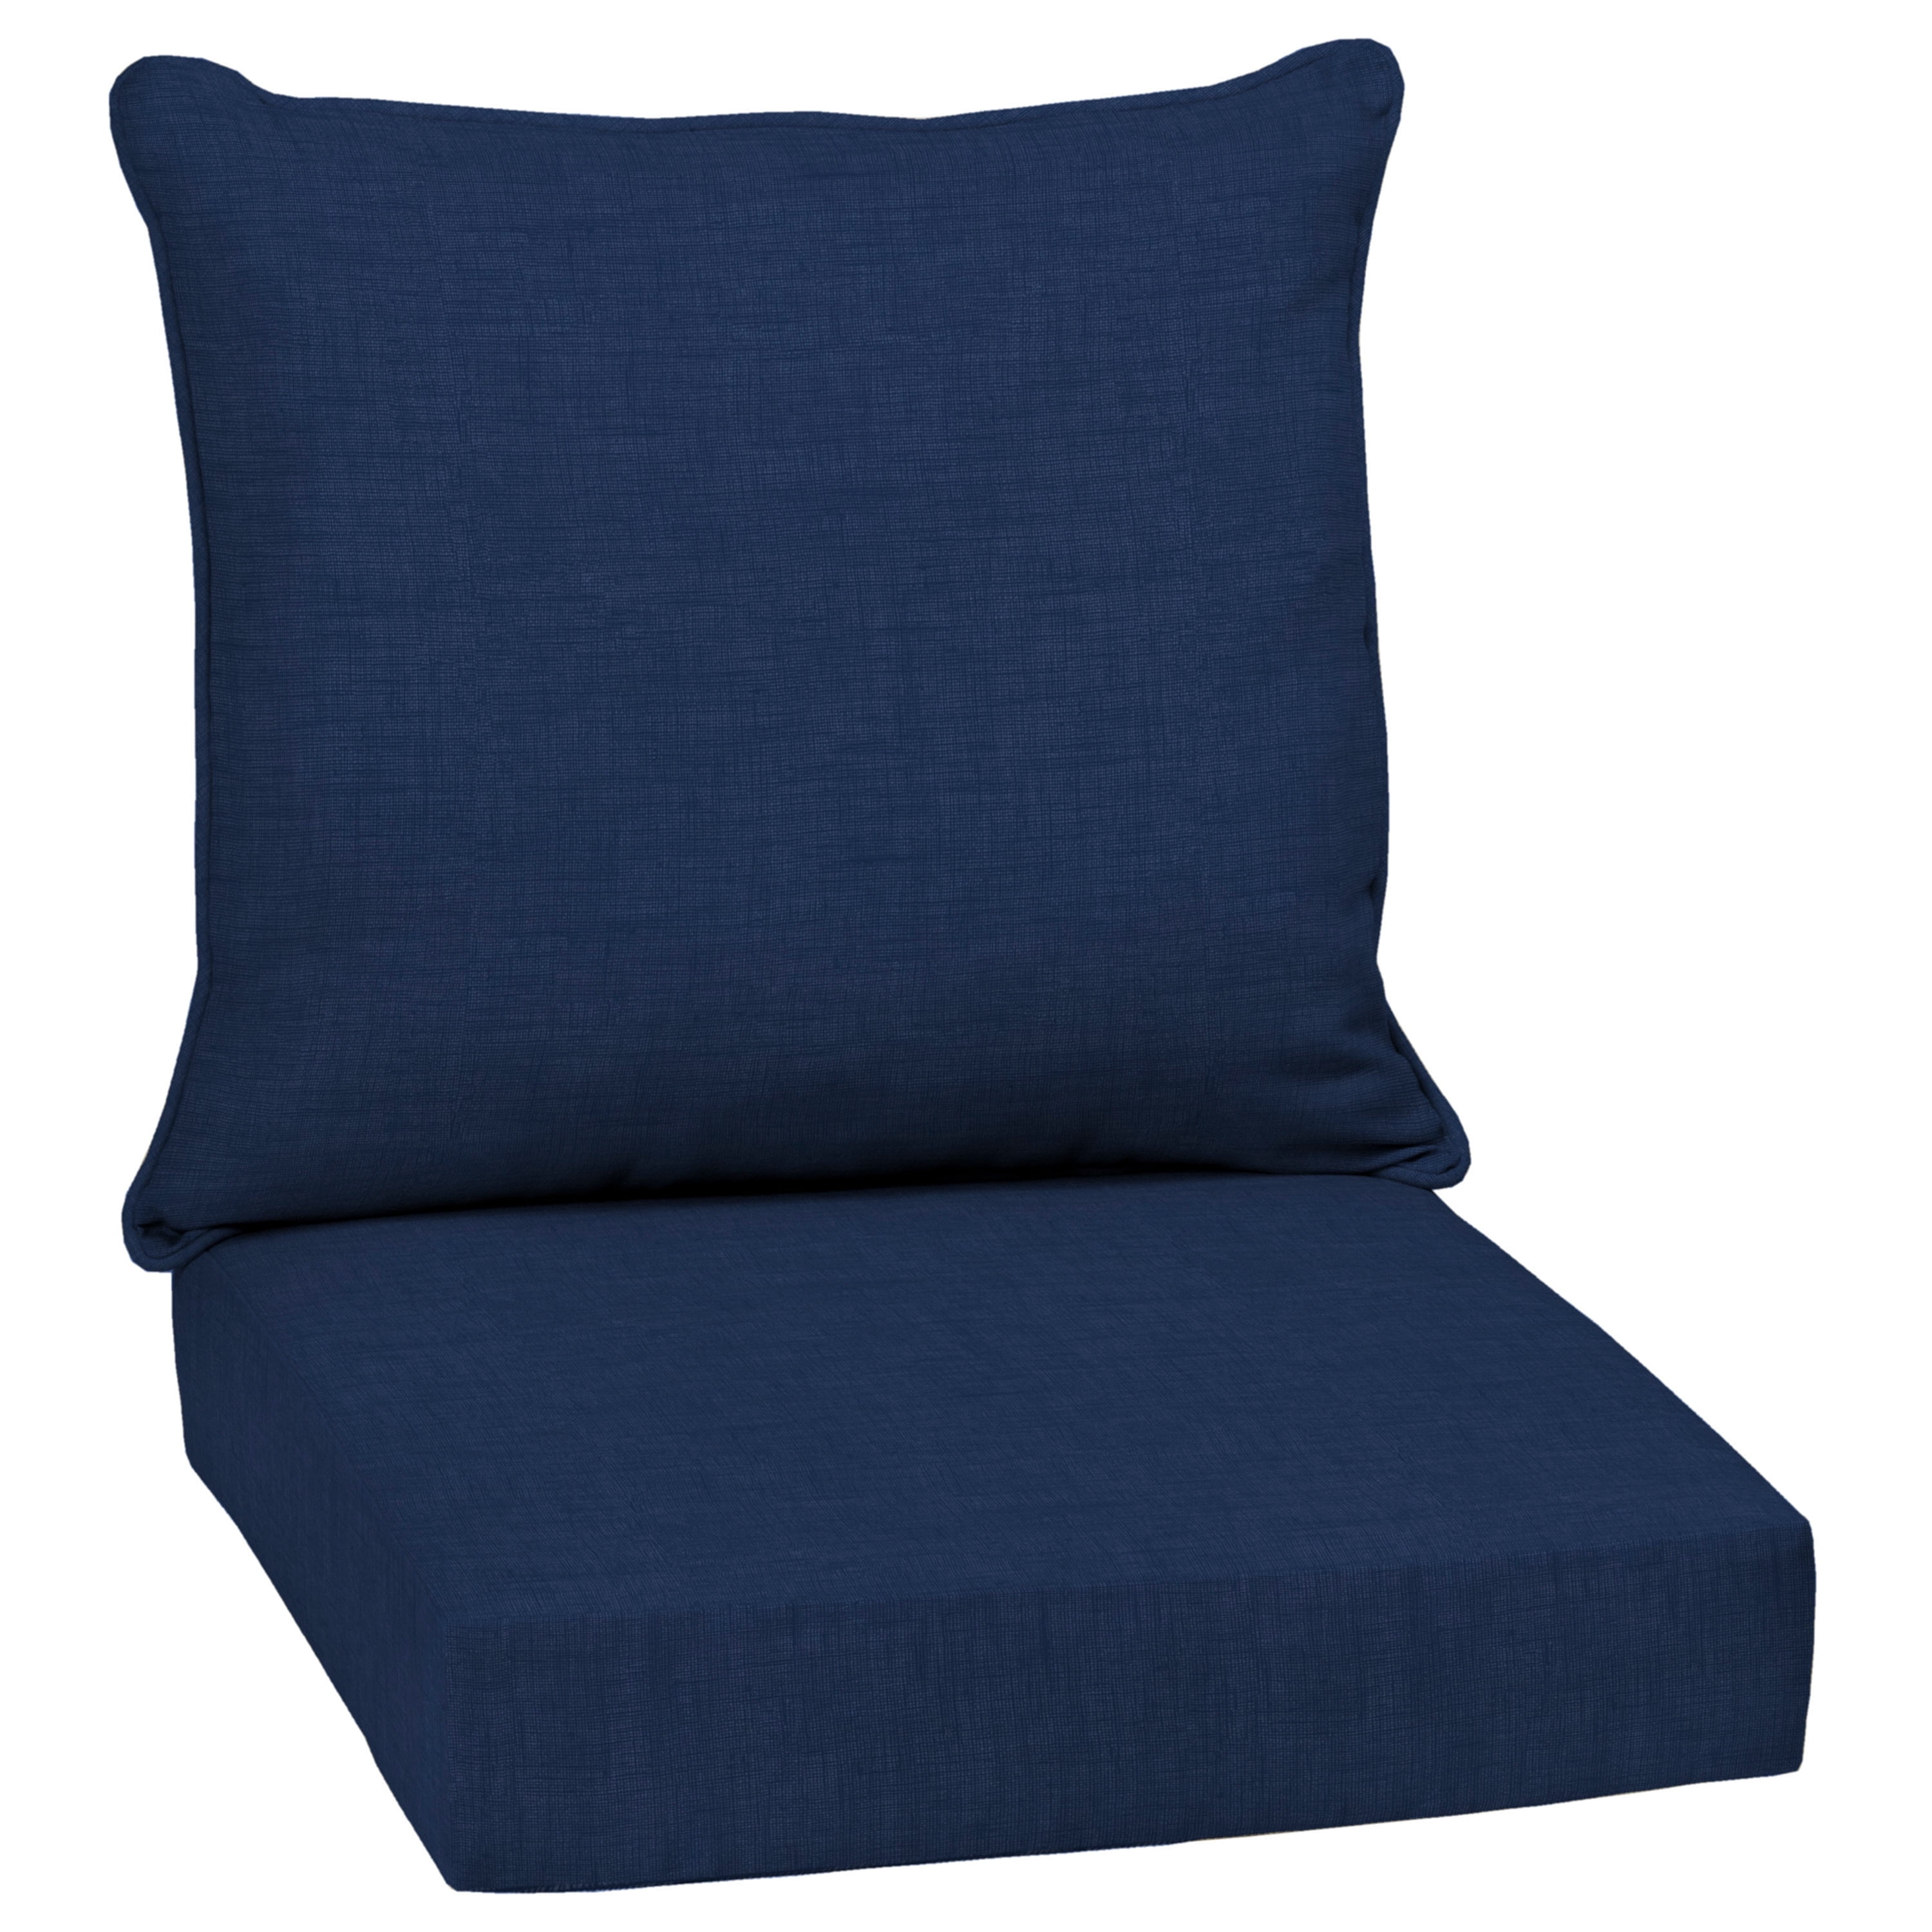 Real Living Deep Seat Outdoor Cushion Set